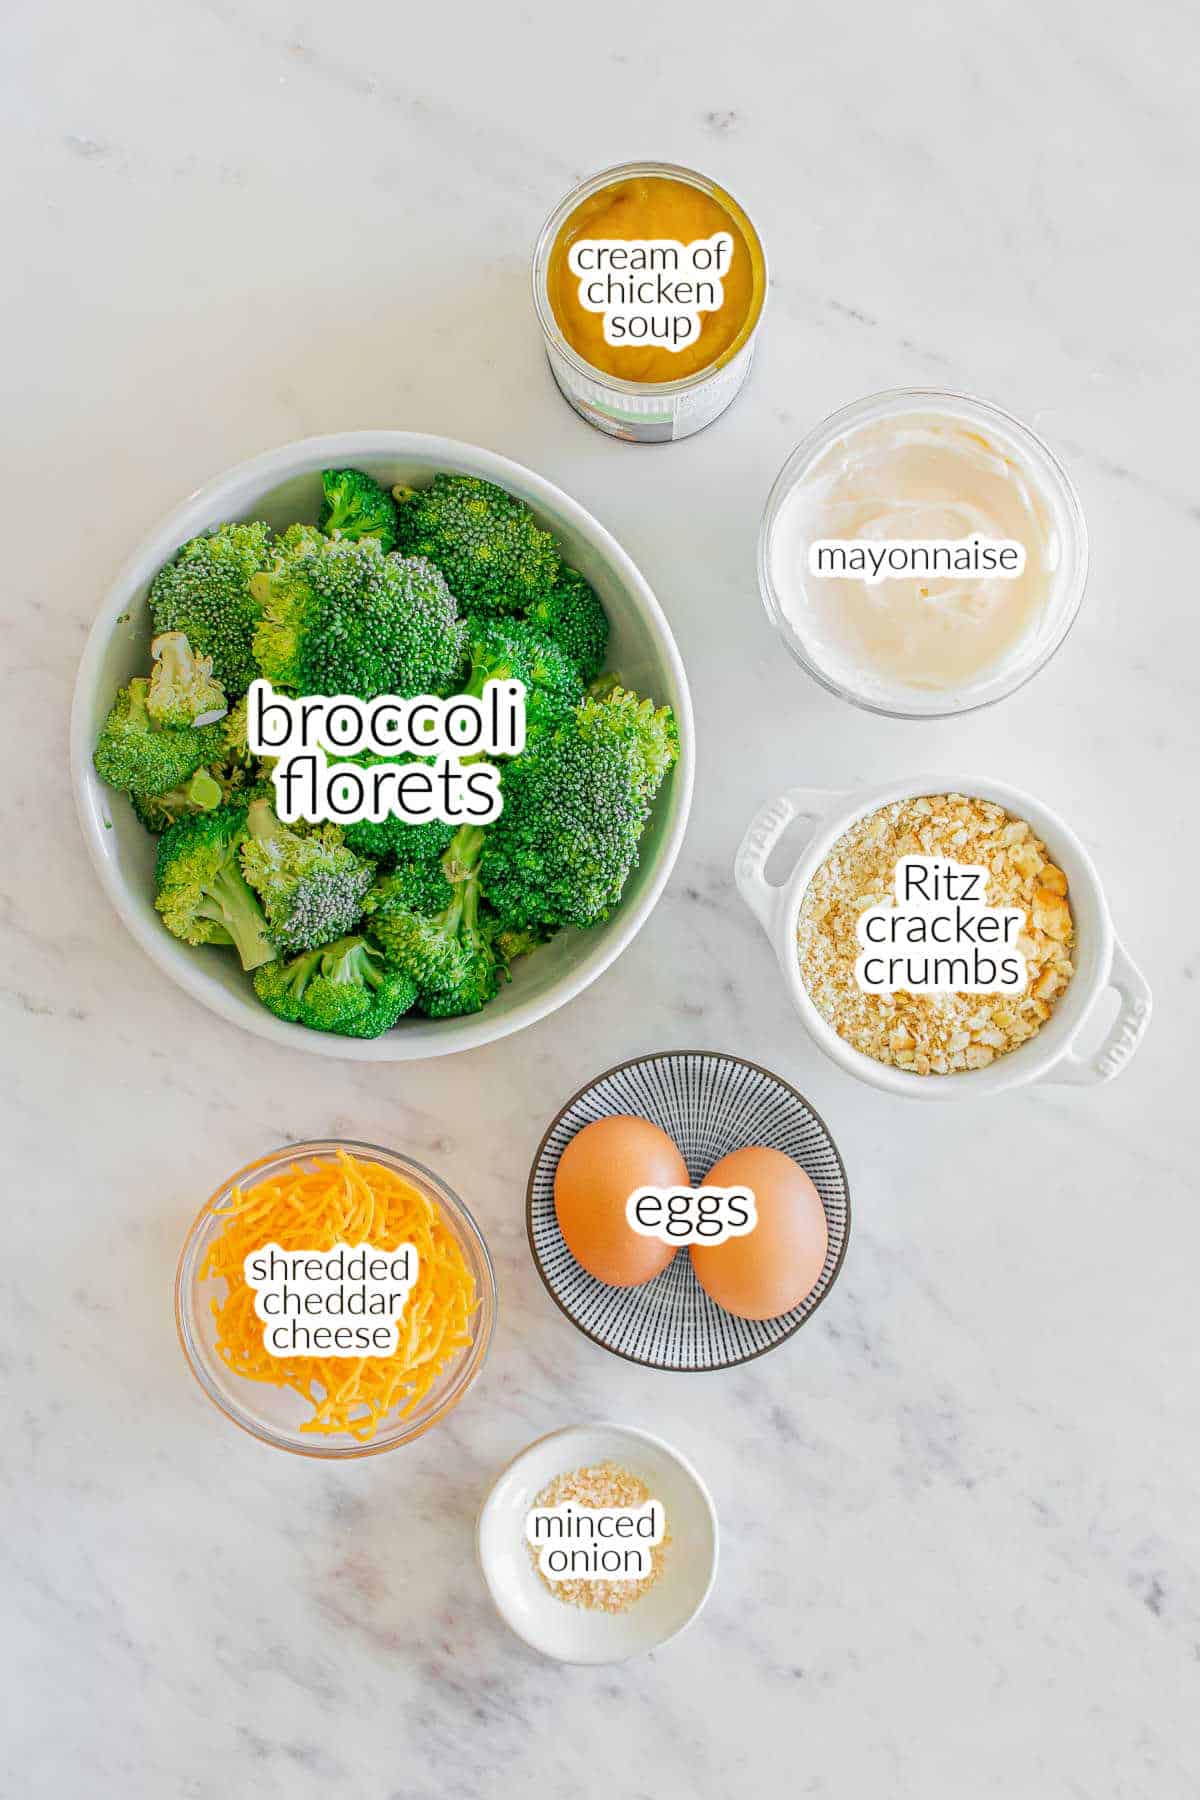 Ingredients for a broccoli casserole - fresh broccoli, cream of chicken soup, mayonnaise, Ritz cracker crumbs, shredded cheddar, eggs, minced onion.